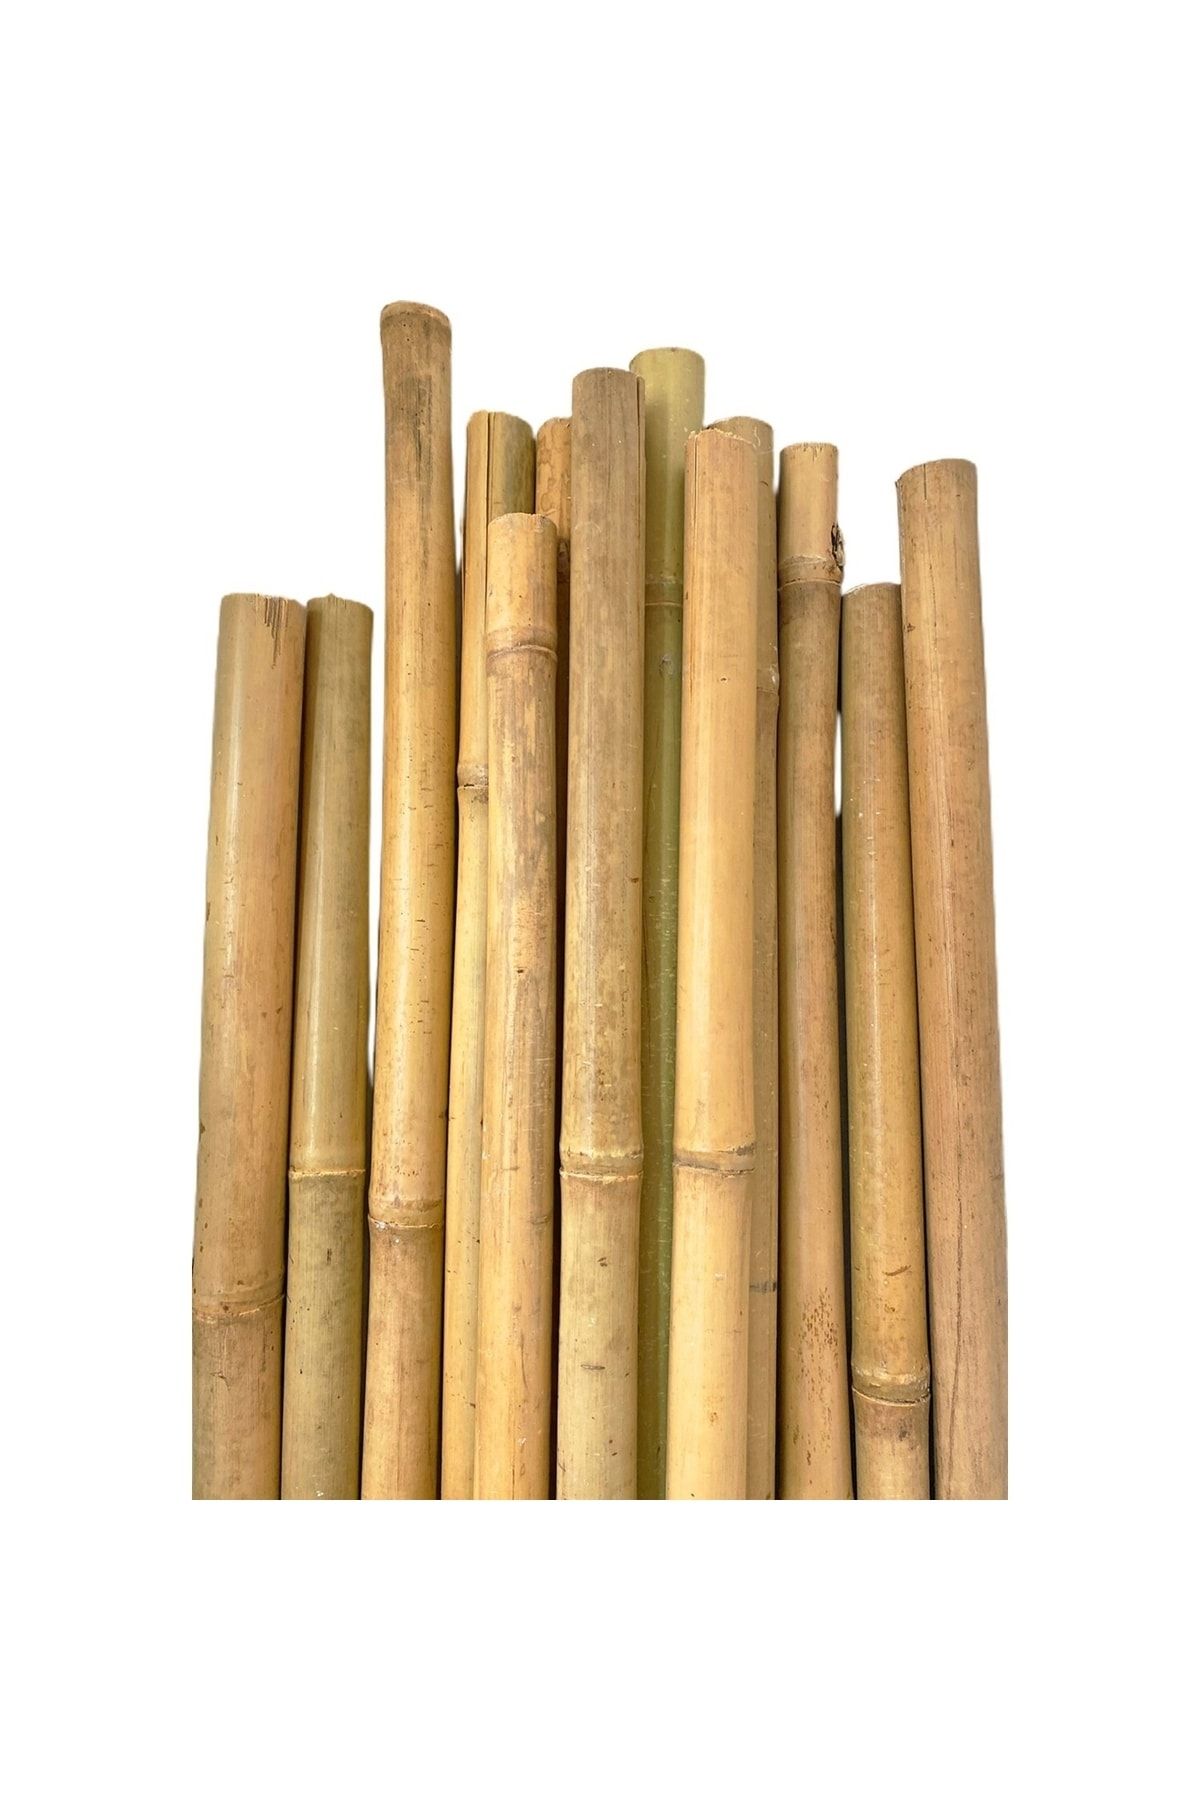 Gardenonya Bambu Bitki Destek Çubuğu 30 Cm (15 Adet) Orjinal Bambu